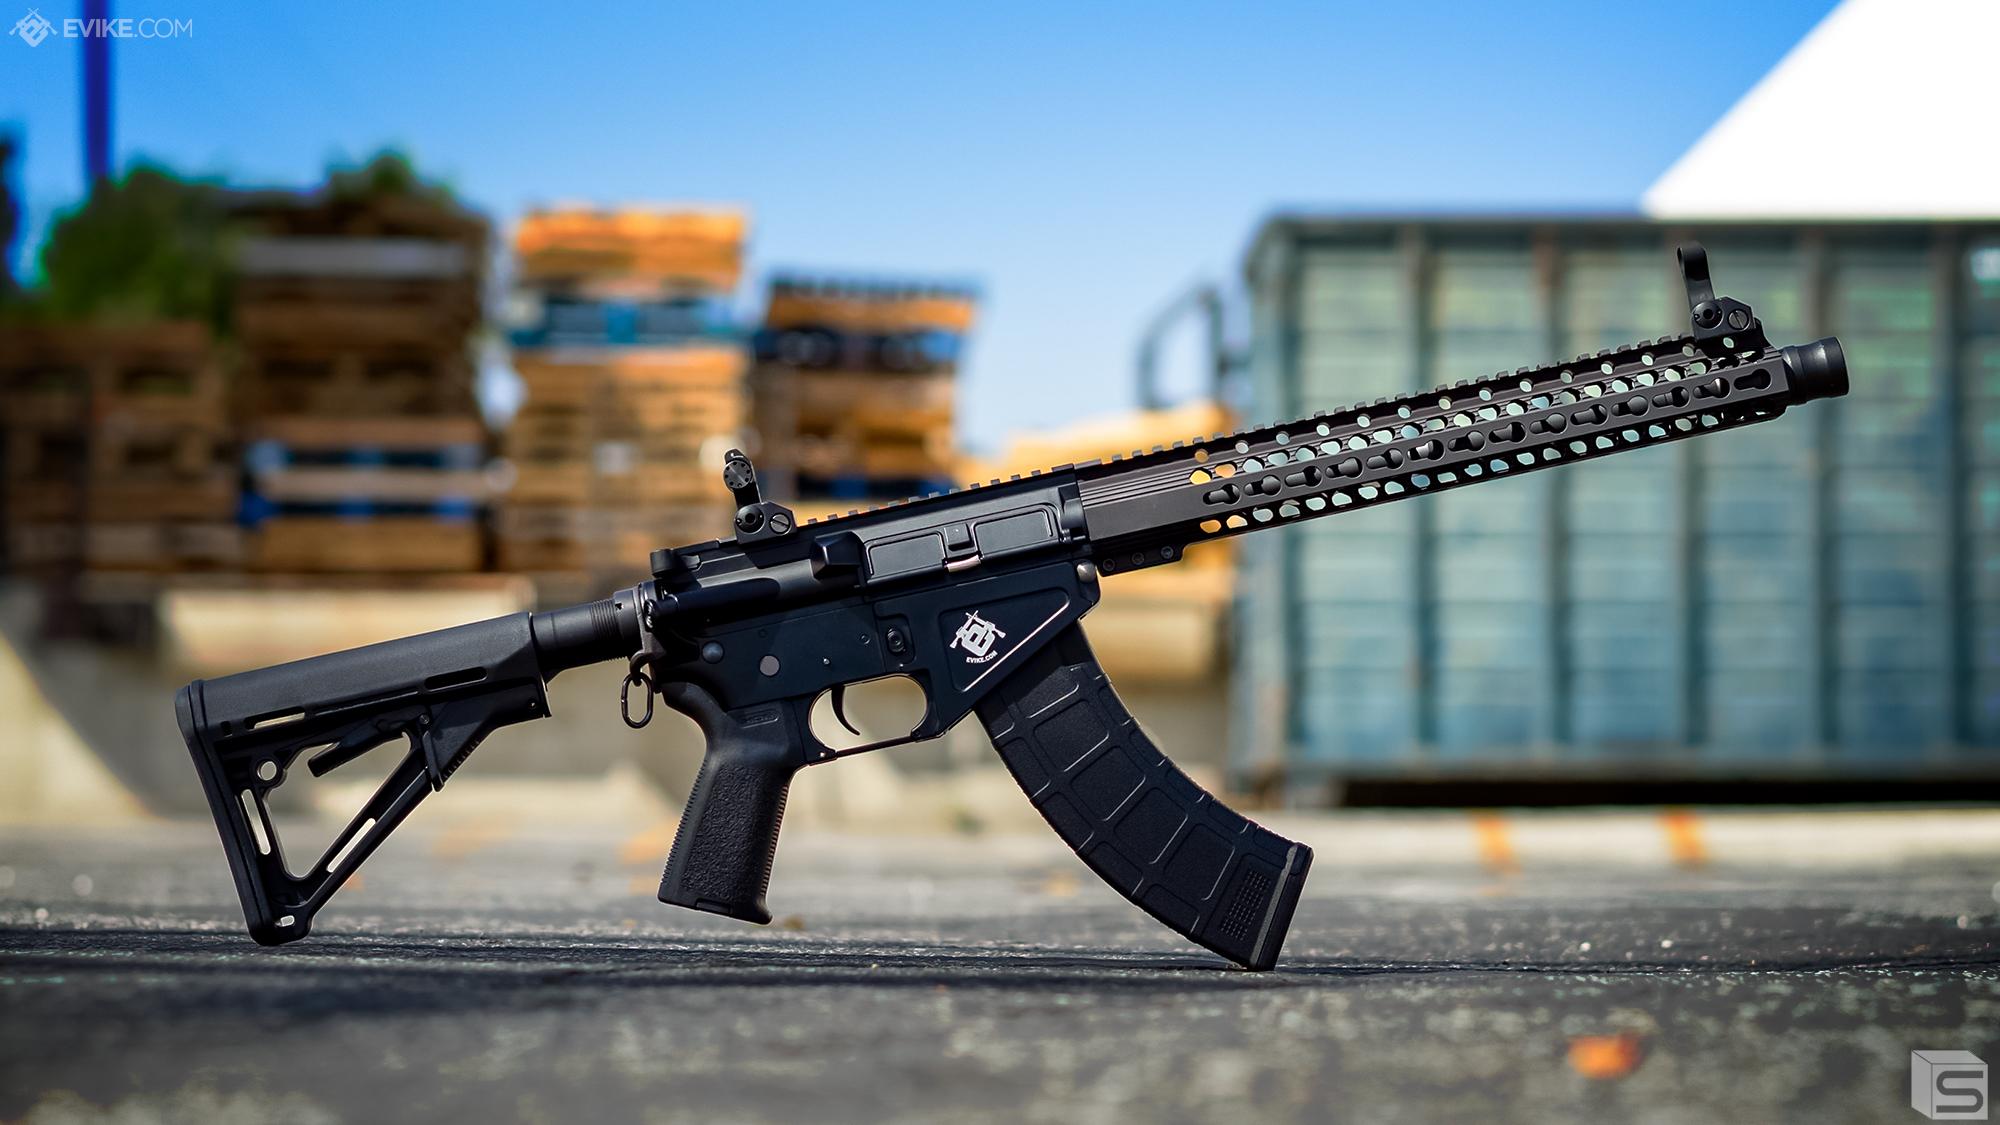 Evike Custom Socom 47 Challenge Kit Receiver Set For M4 M16 Airsoft Aeg Rifles Pro Shop Salient Arms